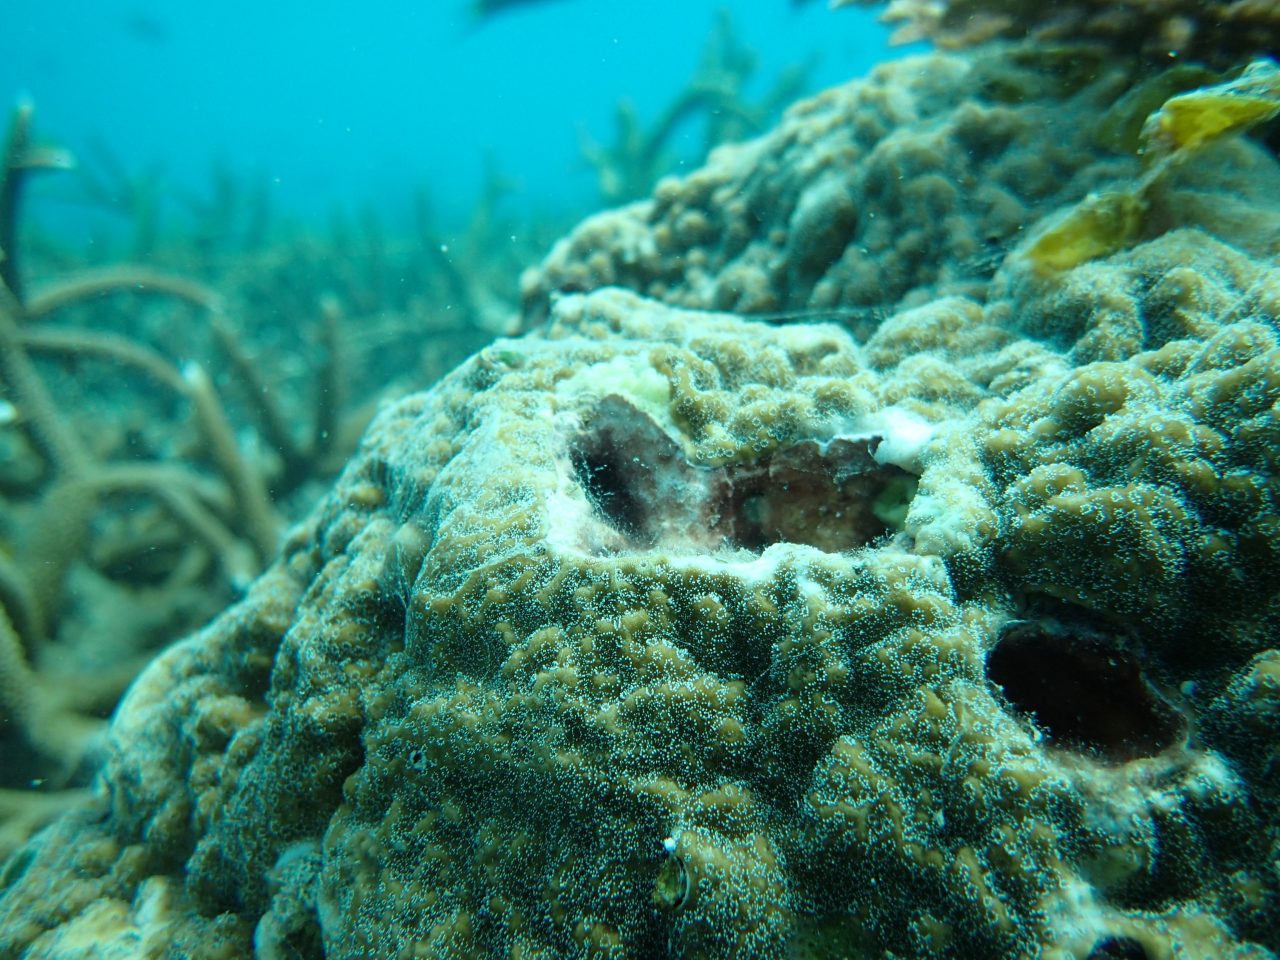 coral disease found in coral reef area at Tioman Island, Malaysia